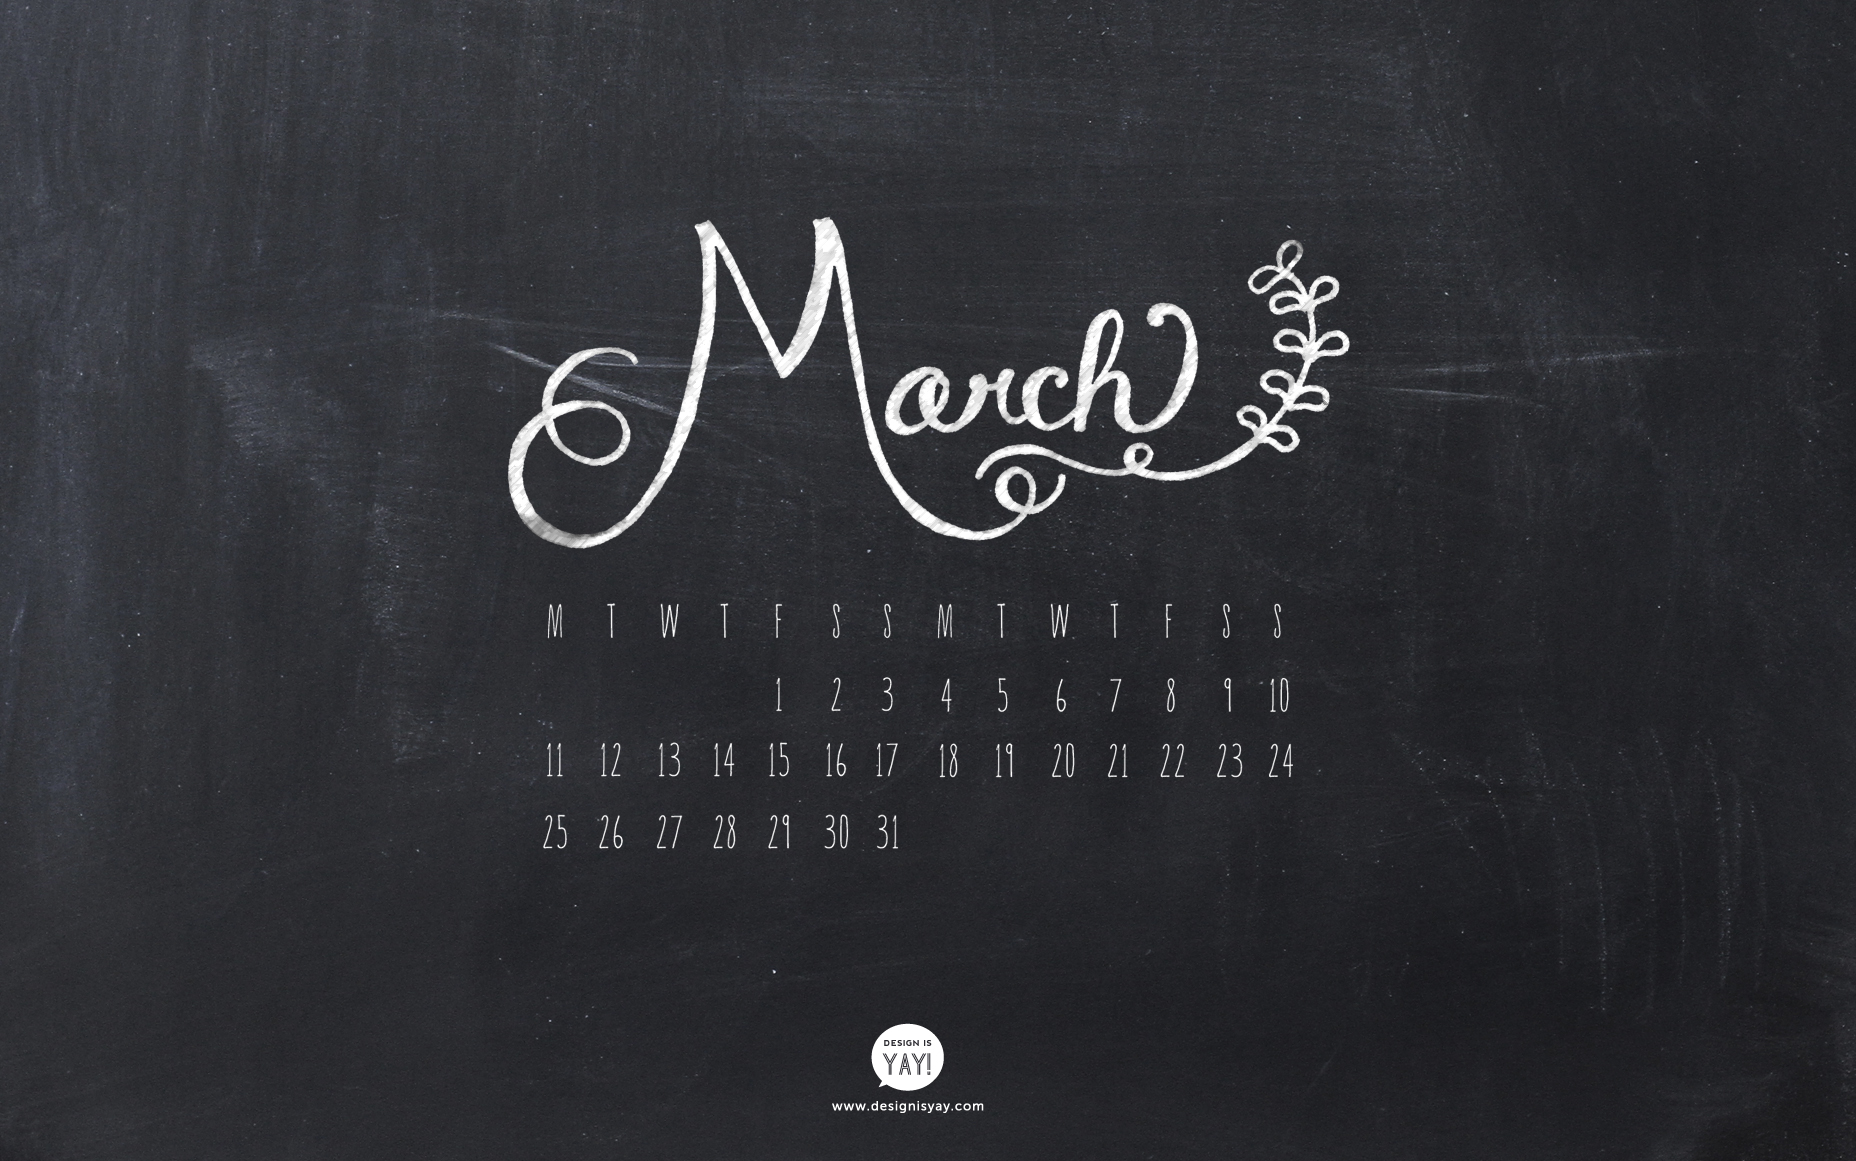 March 2013 Desktop Calendar Wallpaper by Design is Yay 1856x1161